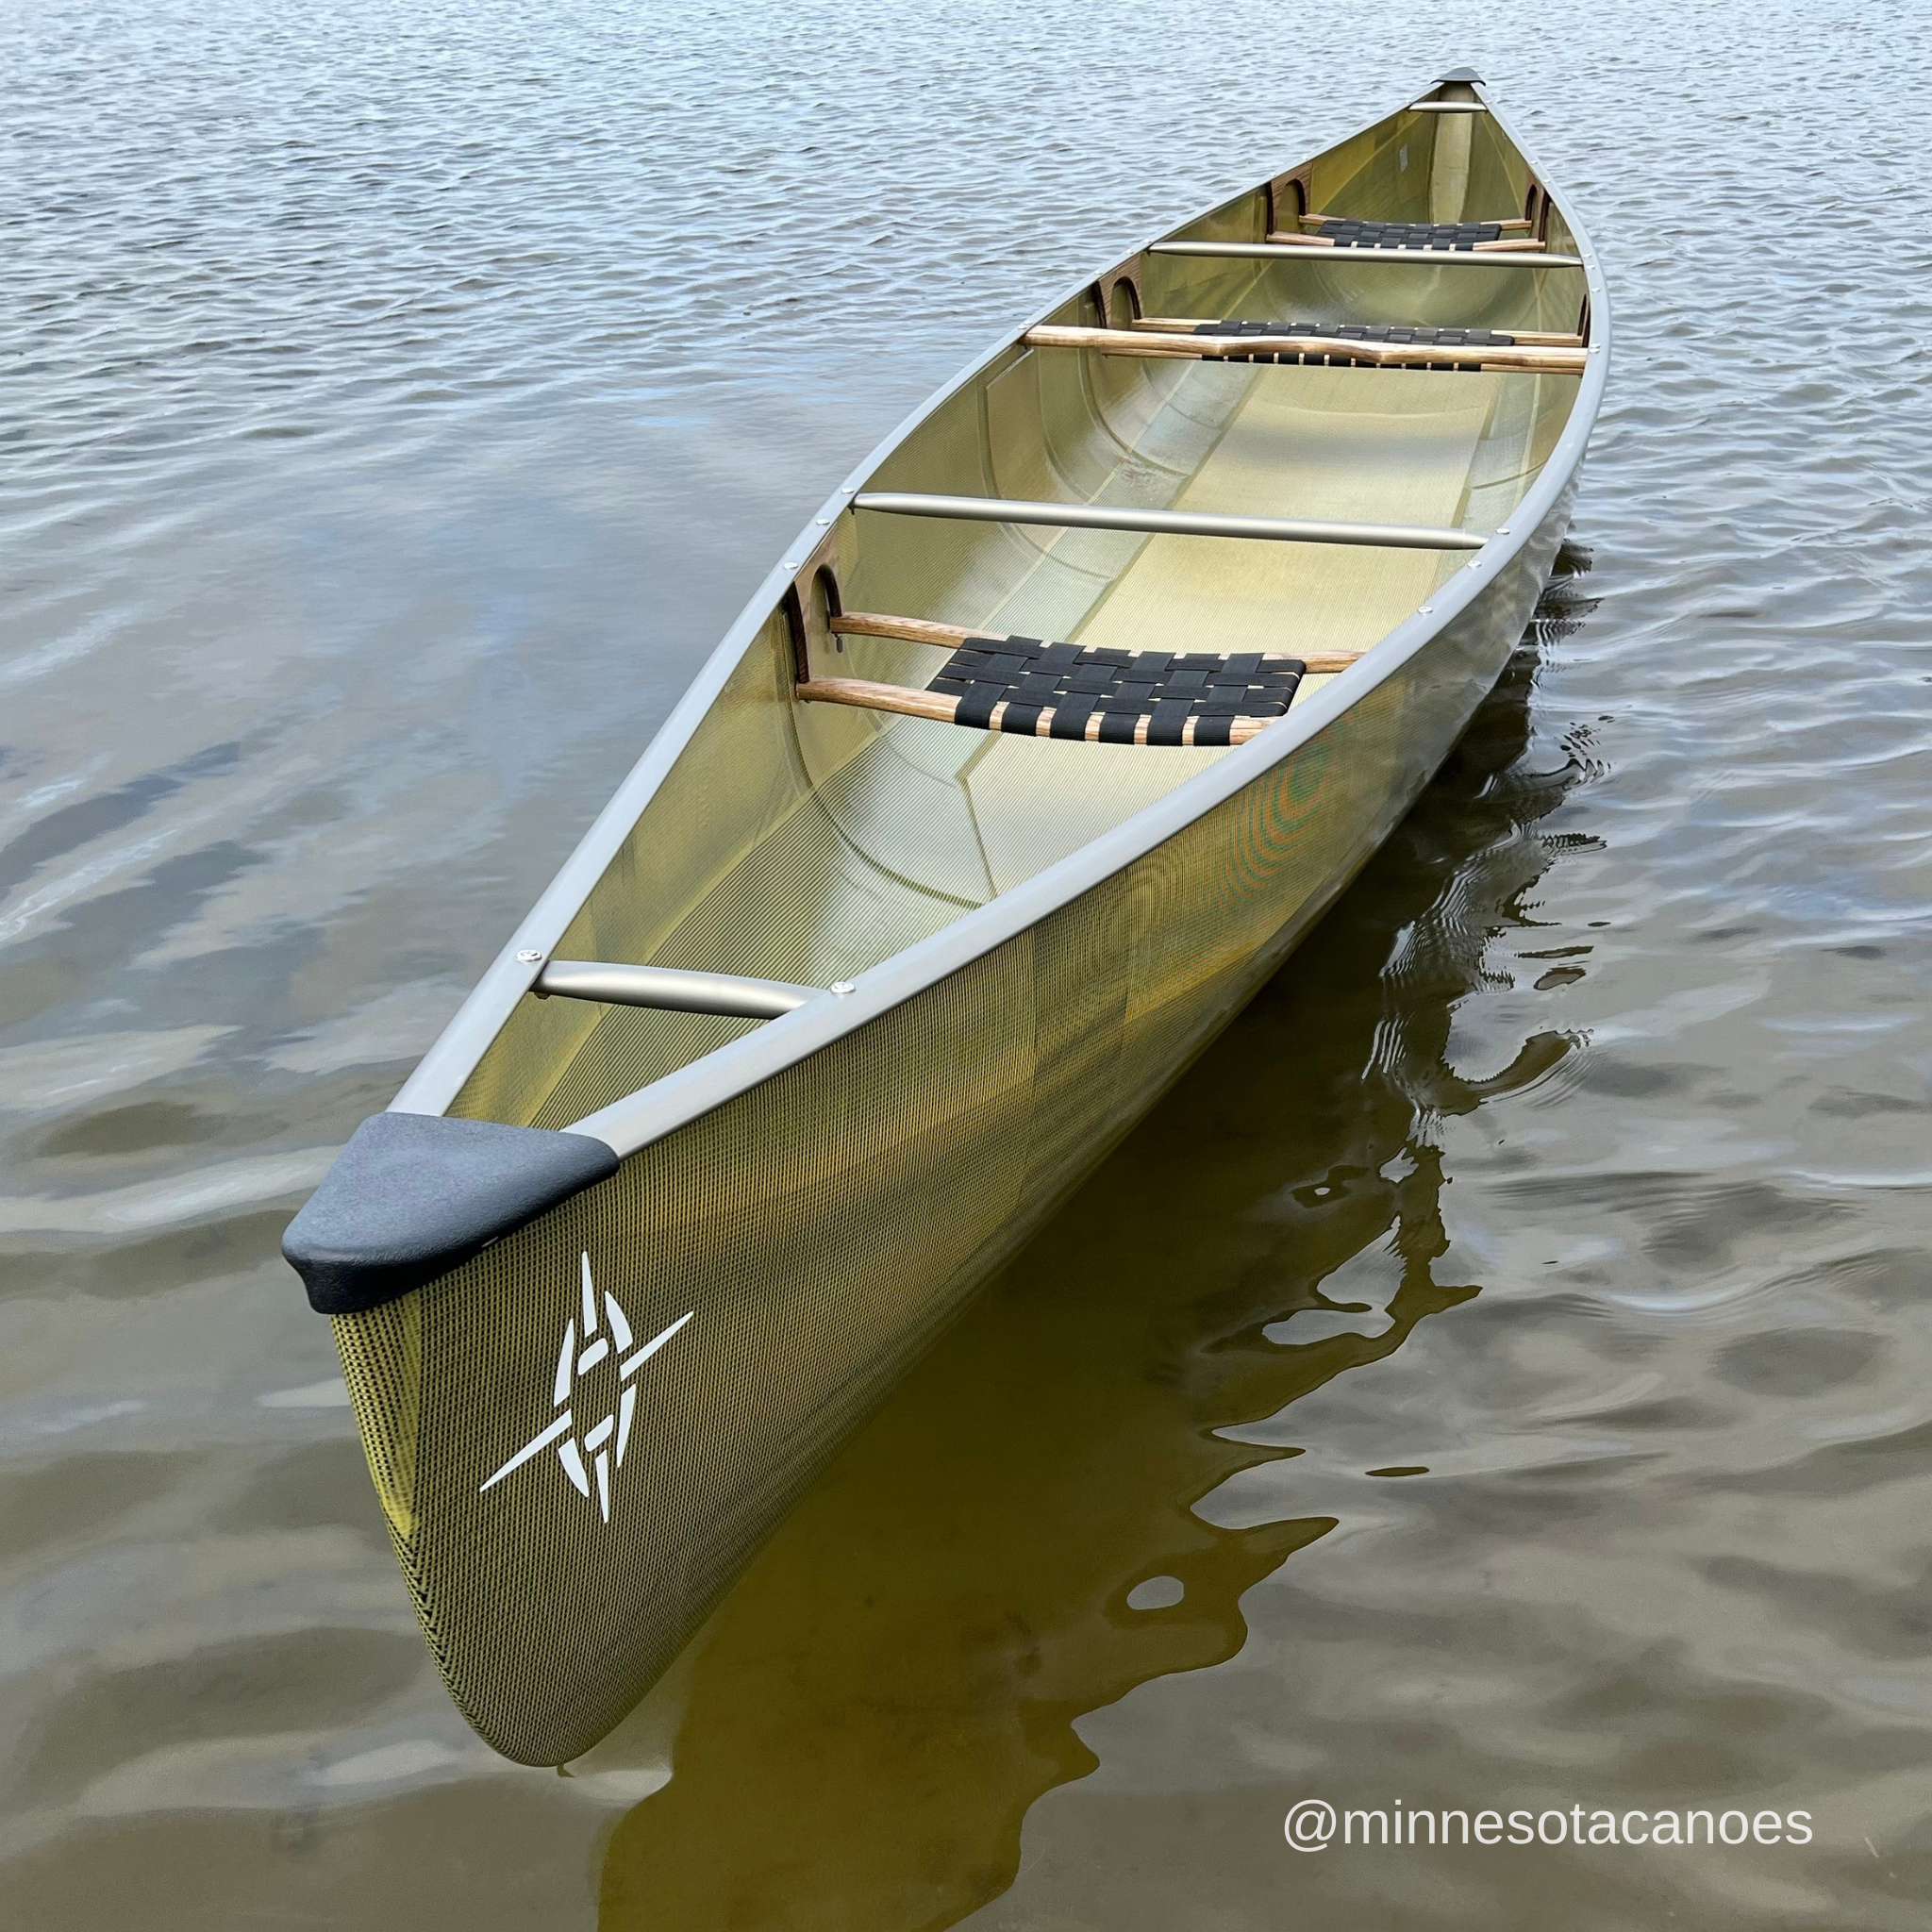 NORTHWIND 18 (18' 9") StarLite Tandem Northstar Canoe with 3 Seats